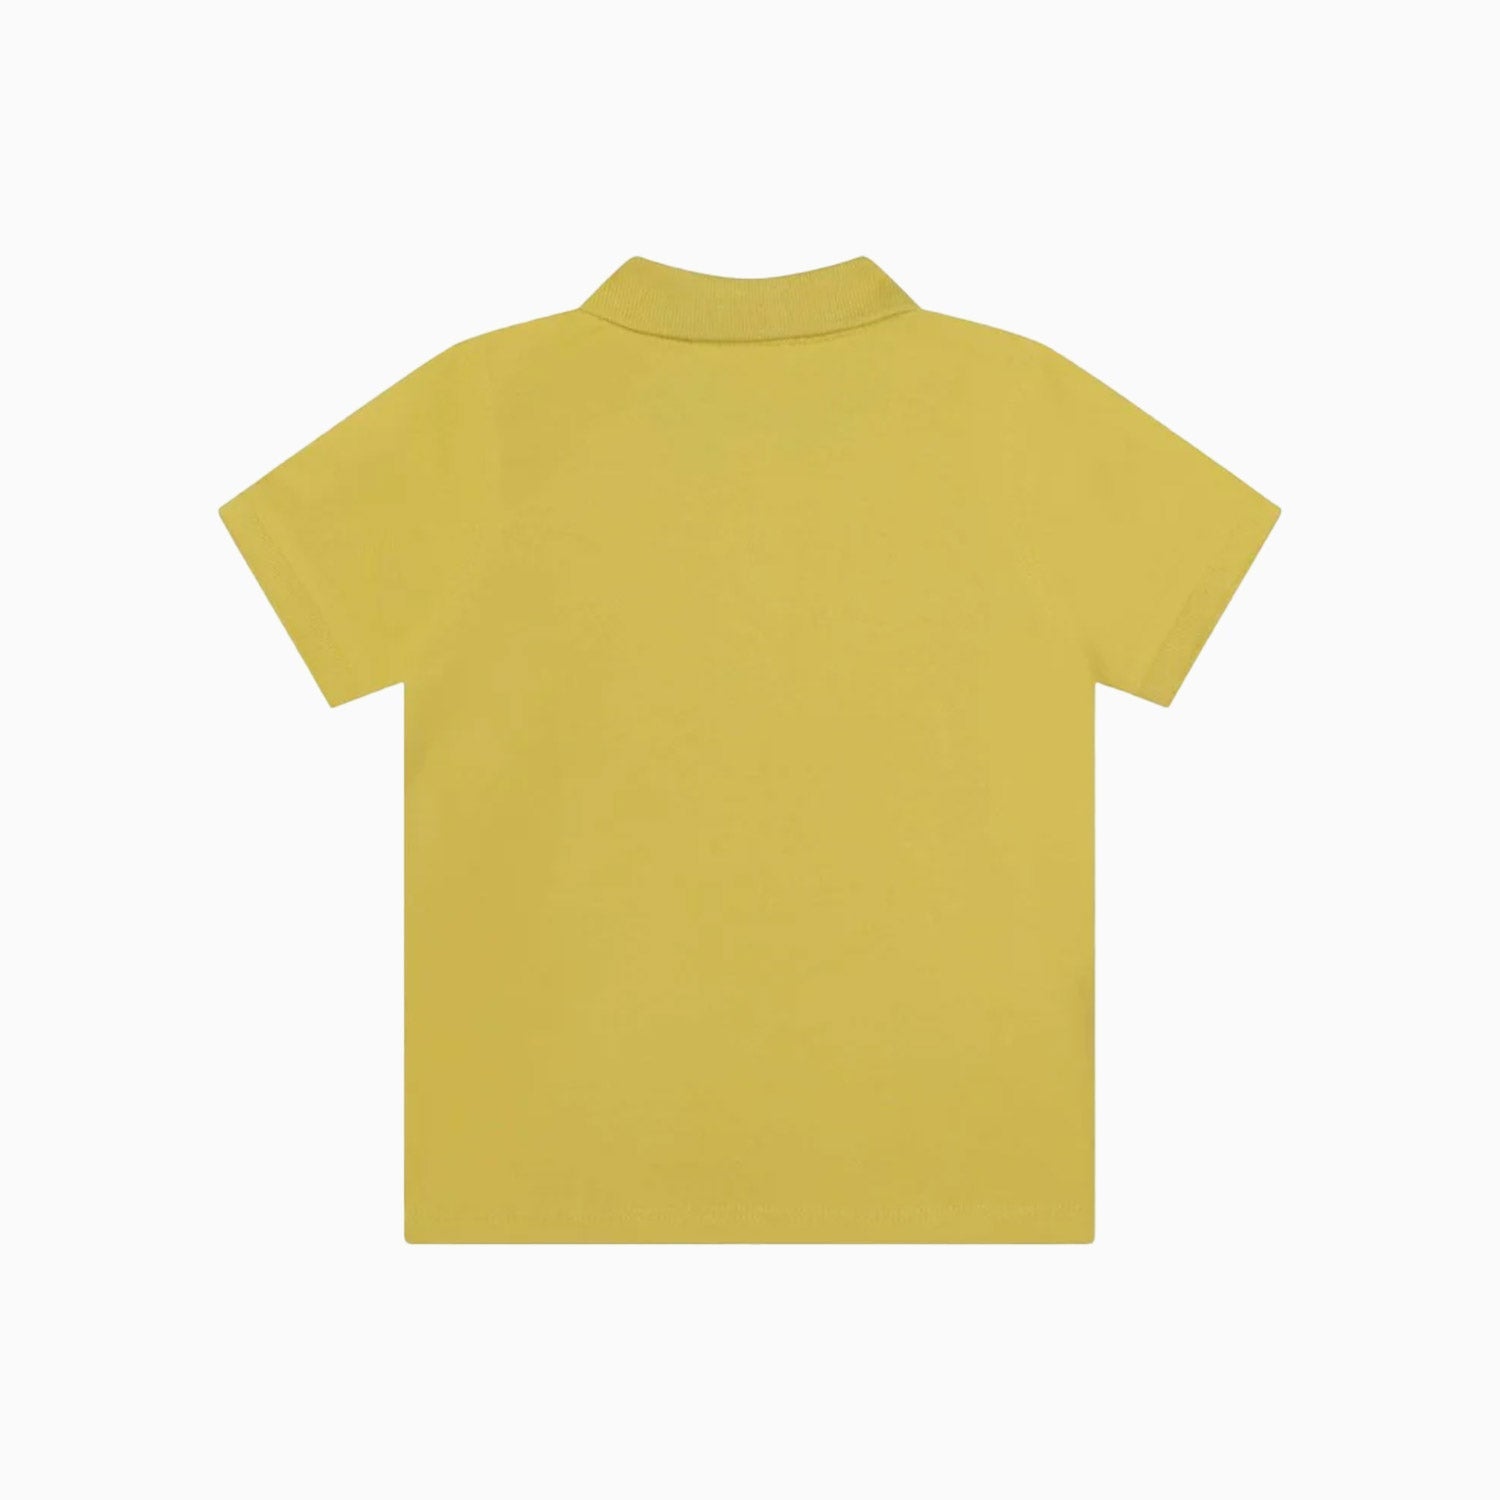 hugo-boss-kids-short-sleeve-polo-tshirt-infants-j05954-616